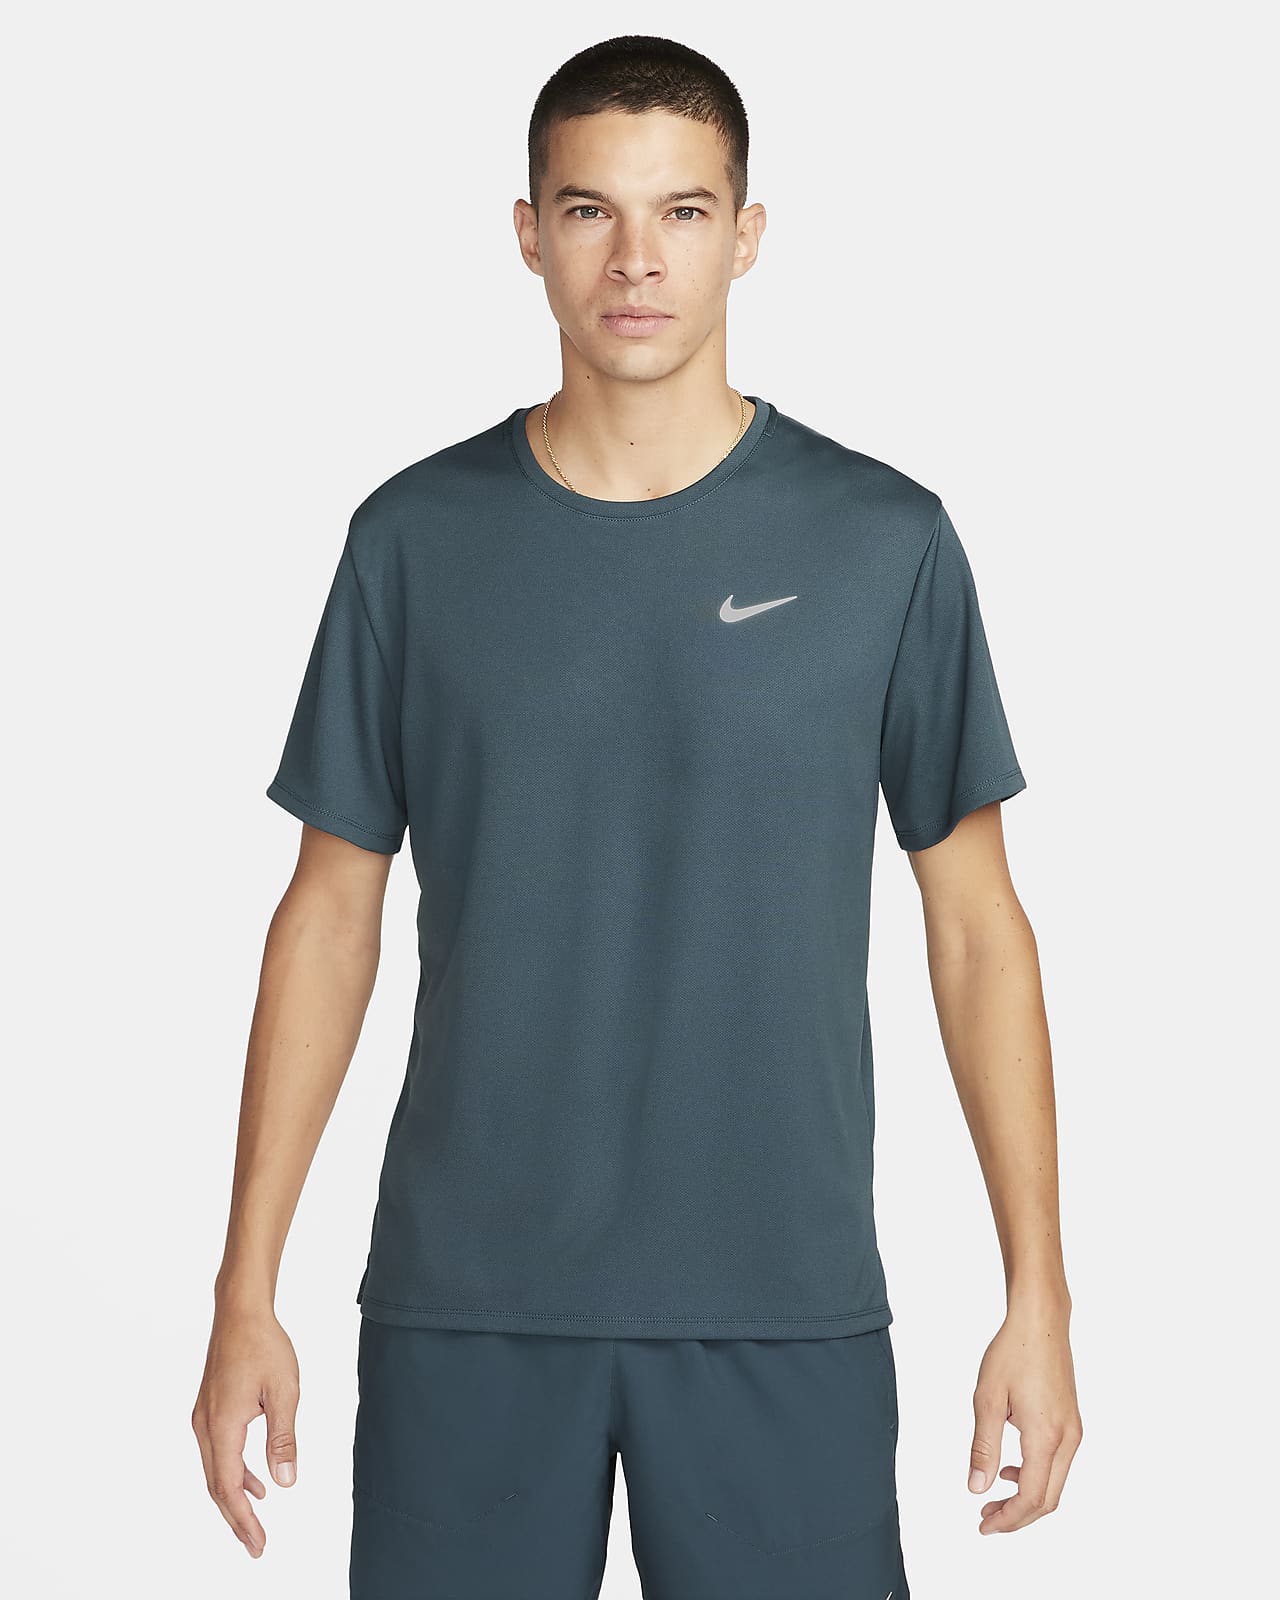 Nike Miler Men's Dri-Fit UV Short-Sleeve Running Top